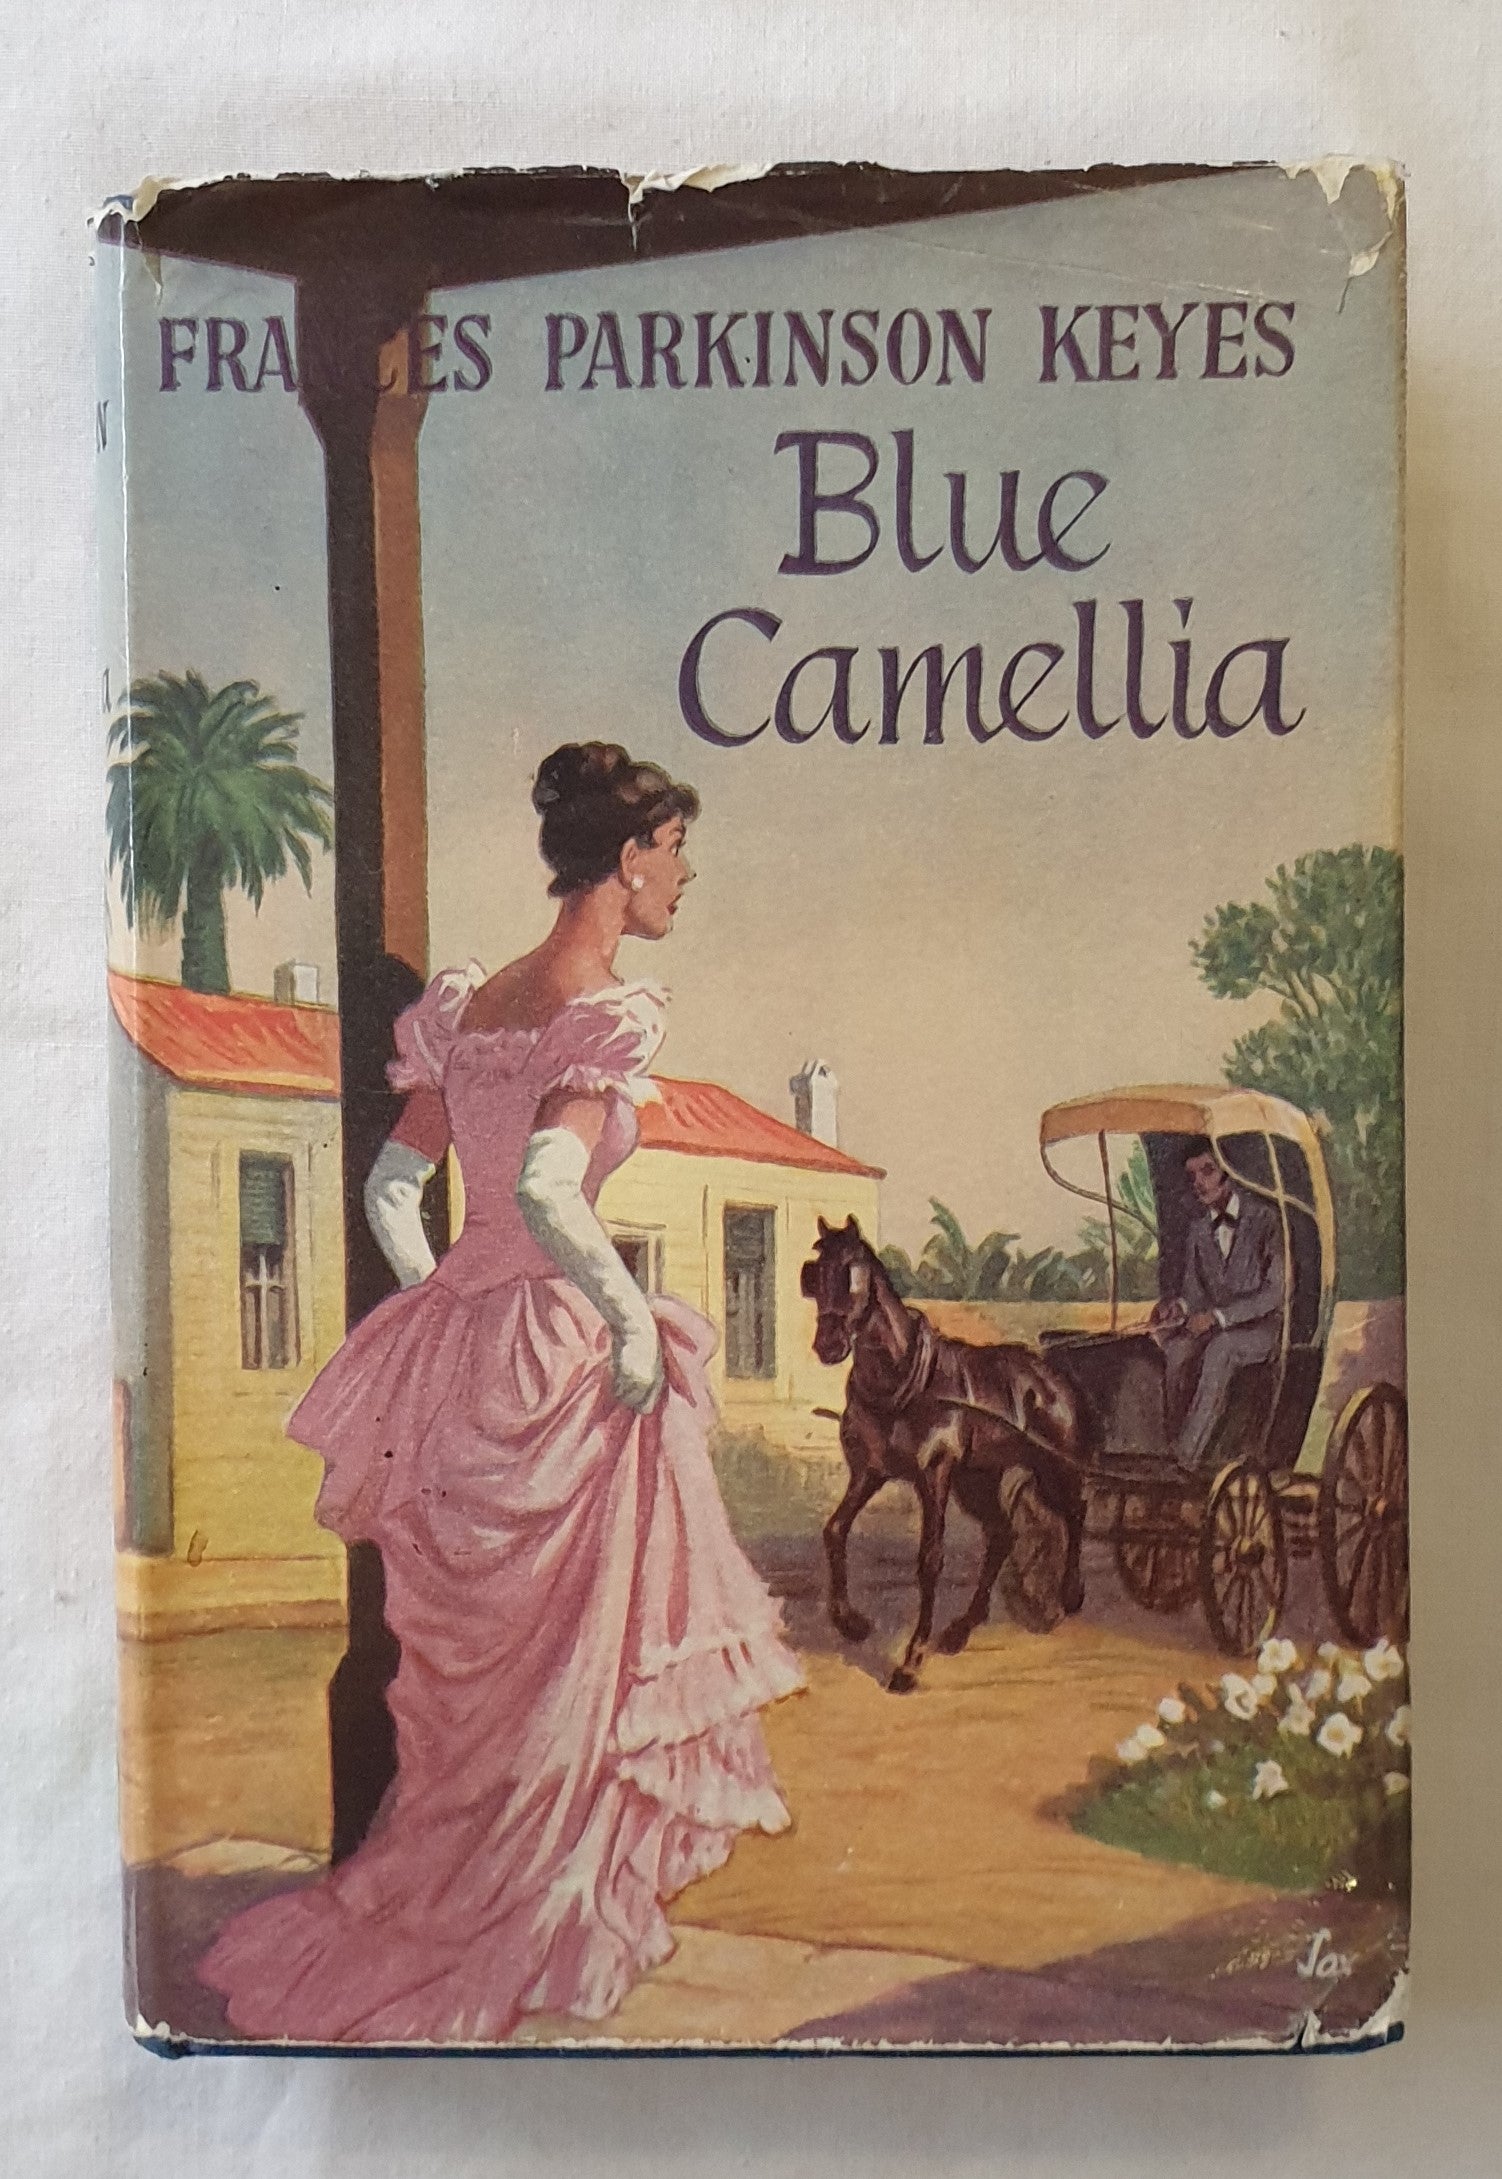 Blue Camellia by Frances Parkinson Keyes